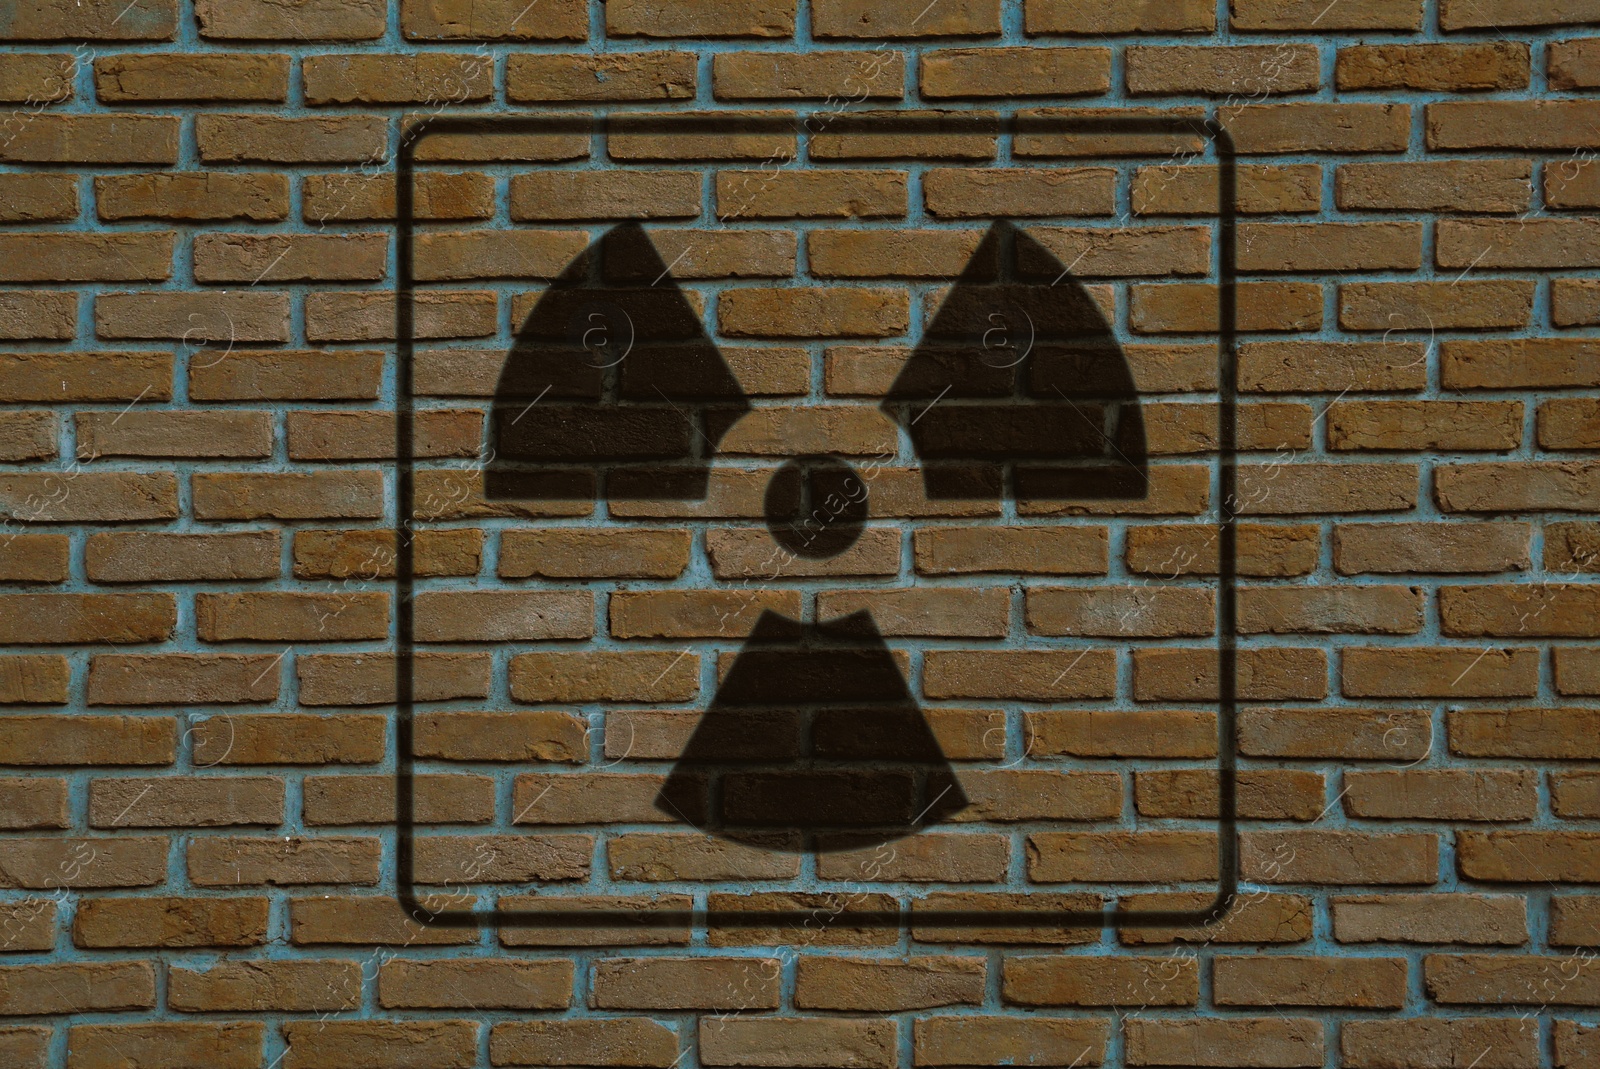 Image of Radioactive sign on brick wall. Hazard symbol